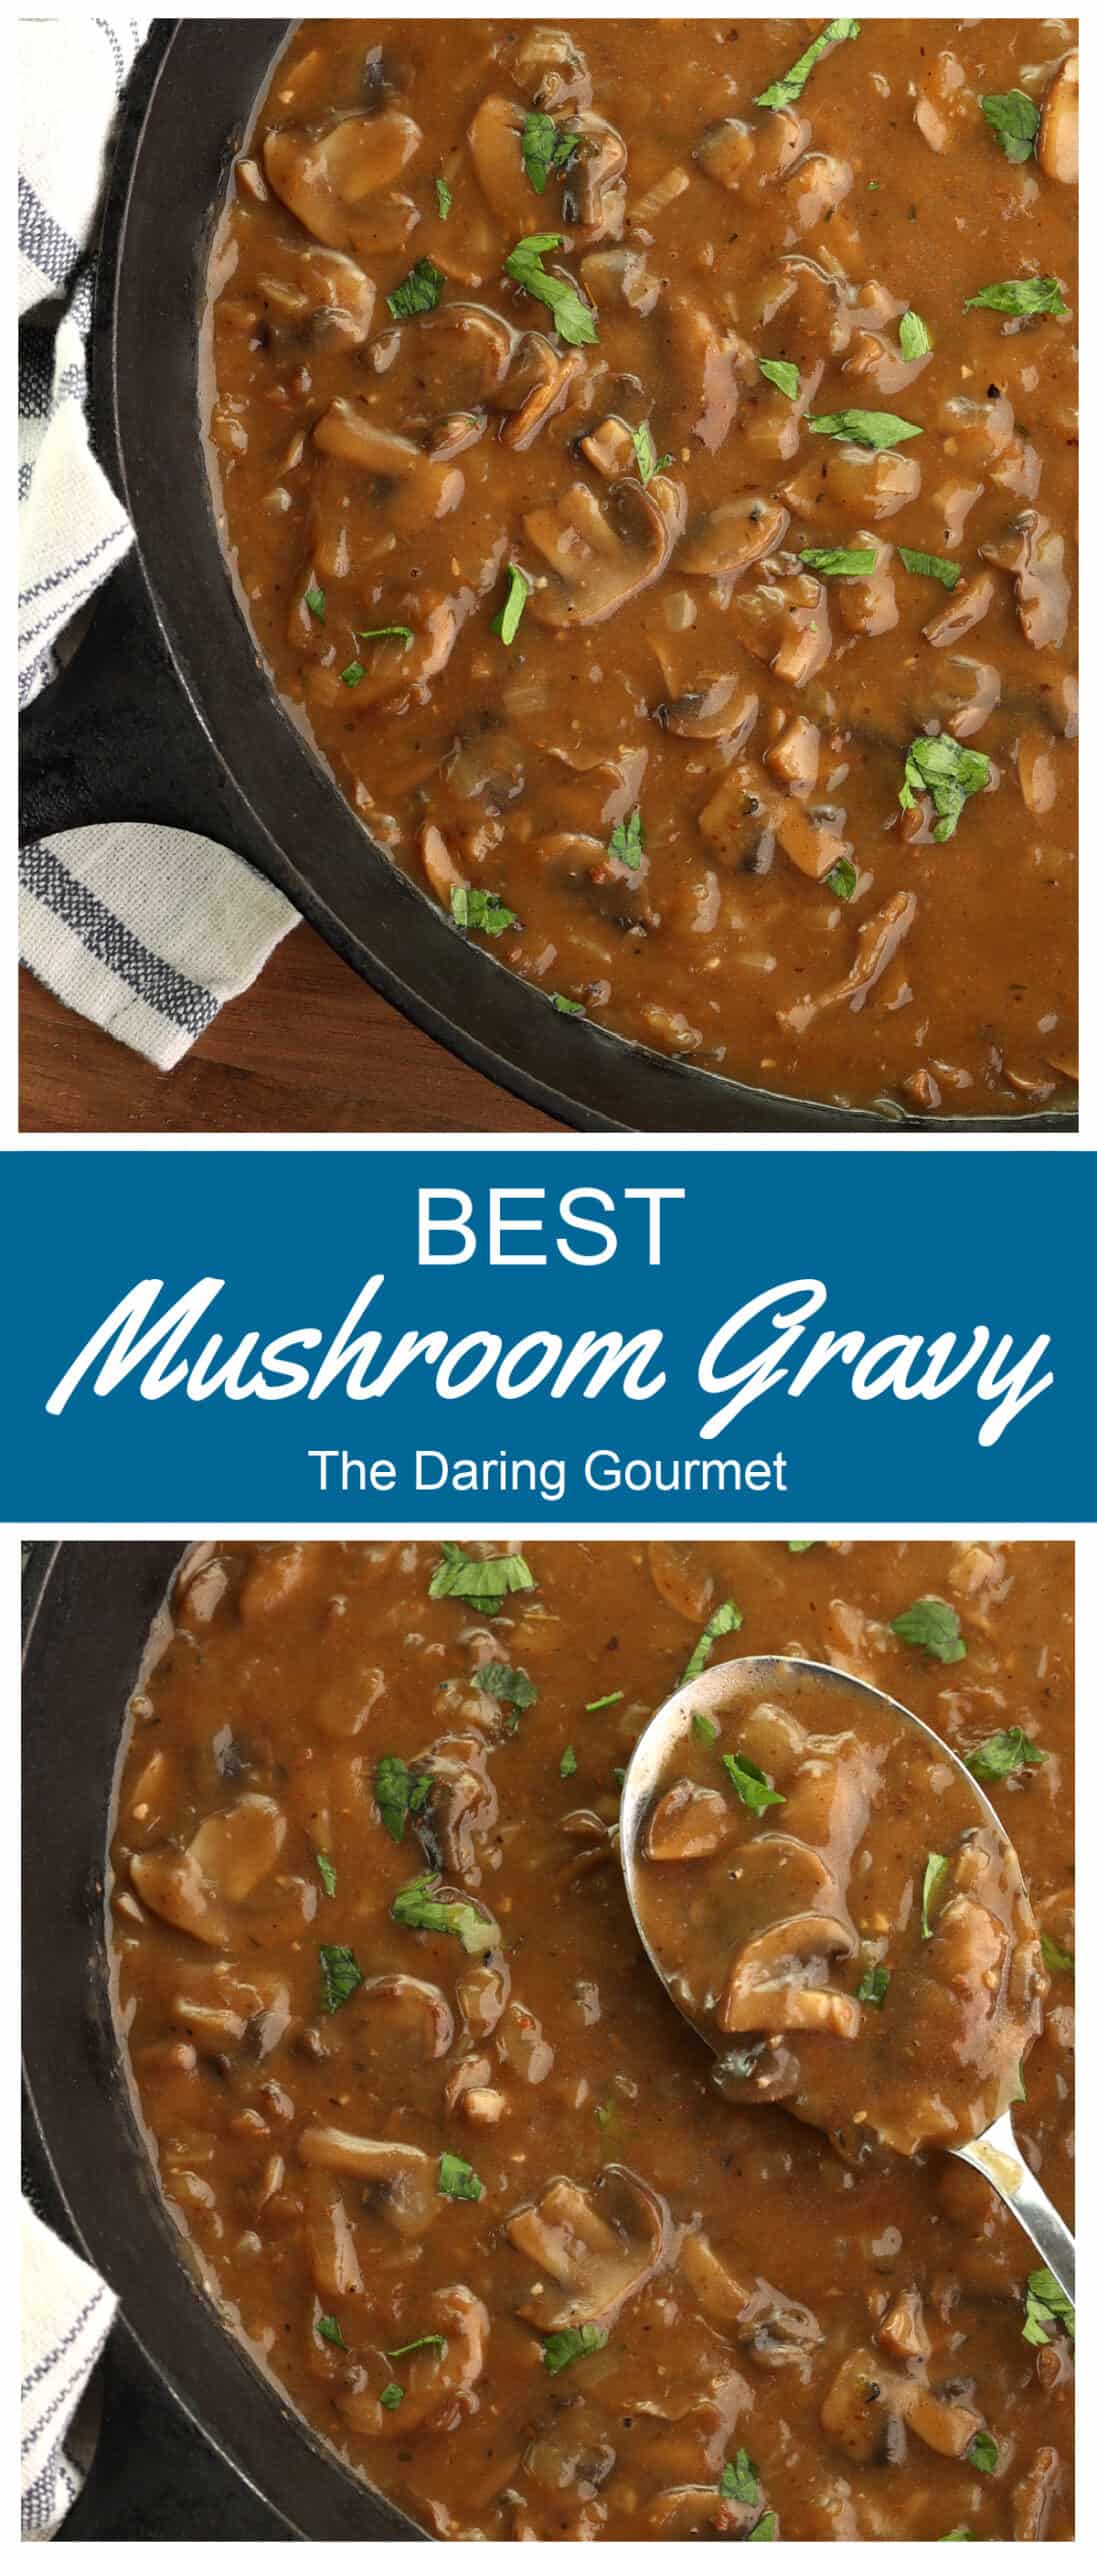 mushroom gravy recipe best homemade from scratch brown sauce